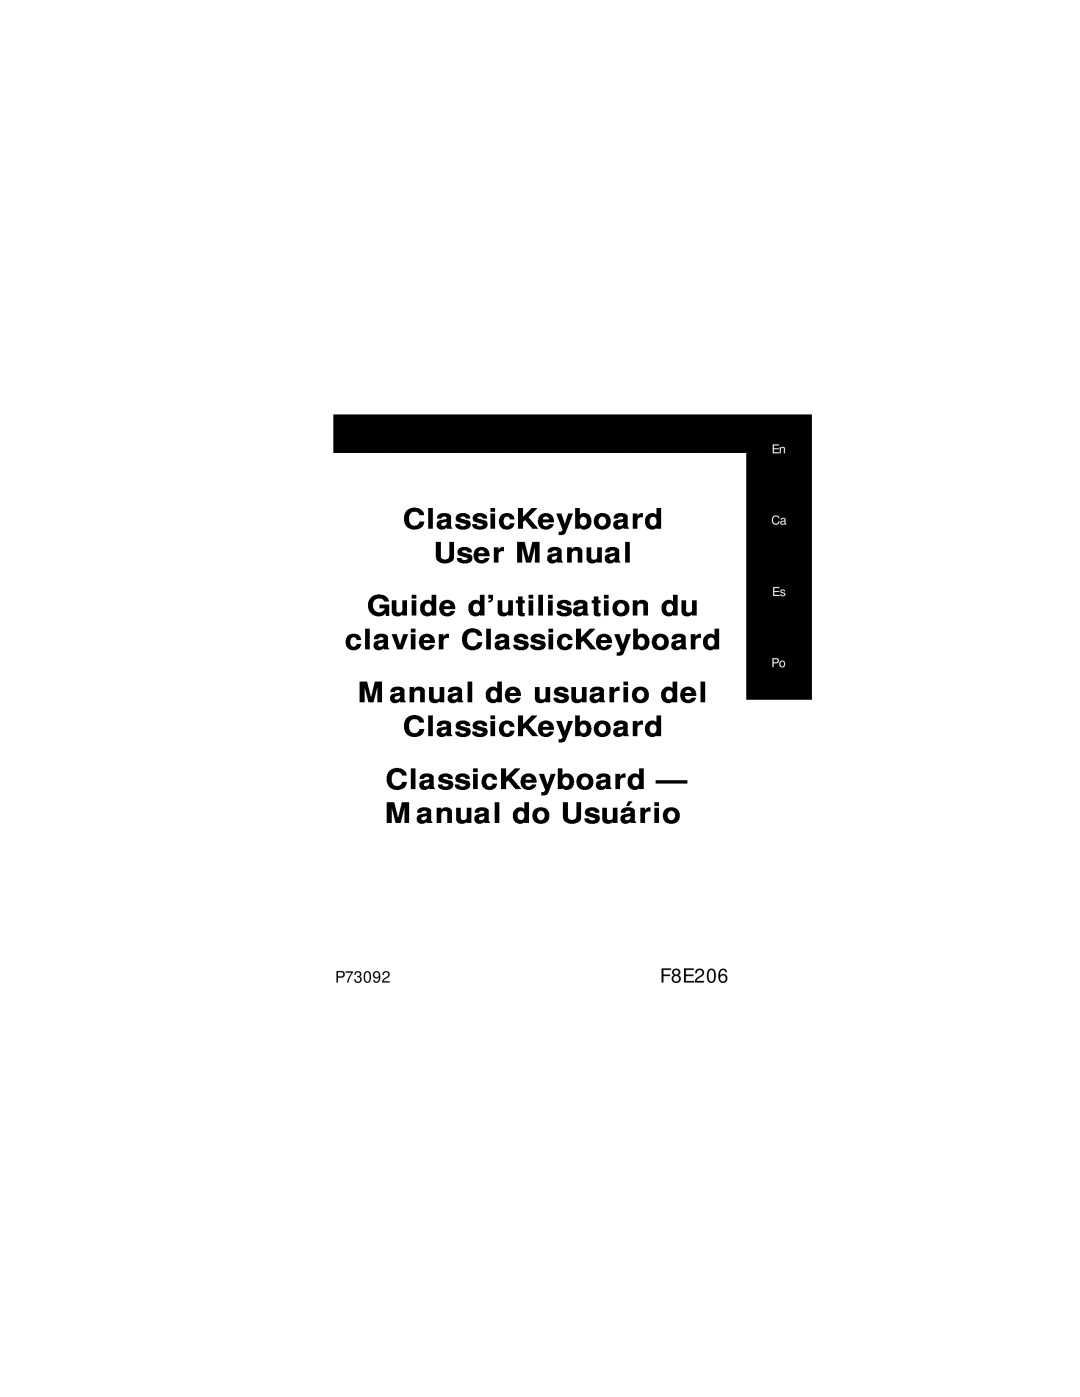 Belkin P73092 user manual ClassicKeyboard User Manual Guide d’utilisation du, ClassicKeyboard - Manual do Usuário, F8E206 